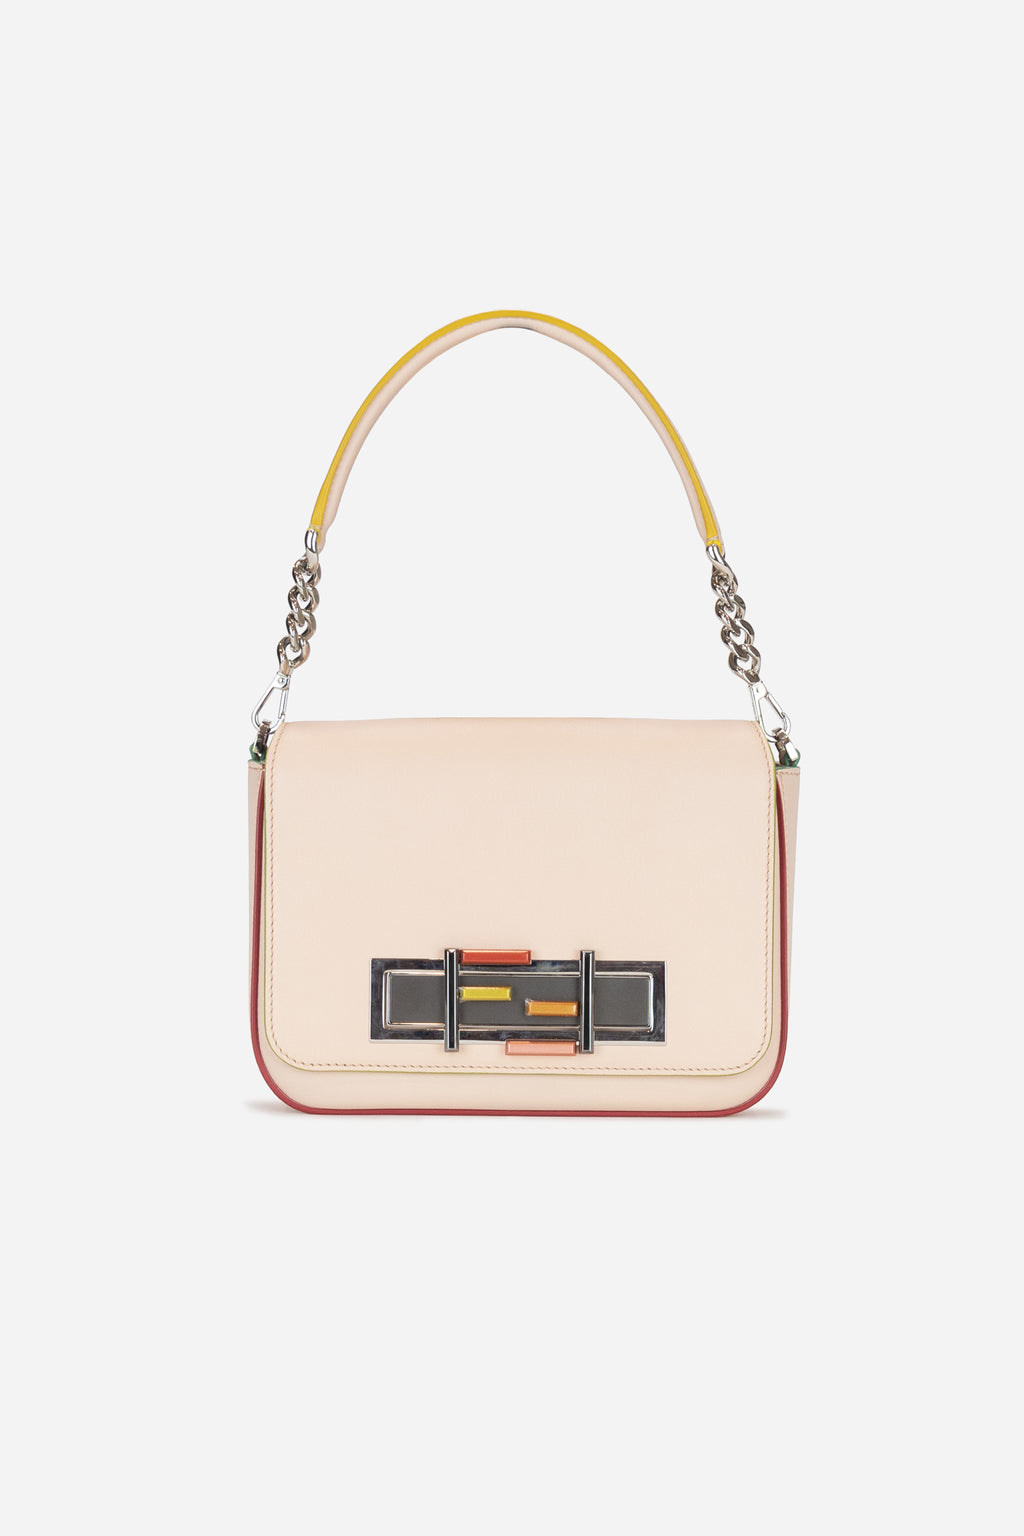 Fendi Baguette Shoulder Bag in Pink Suede – Fancy Lux